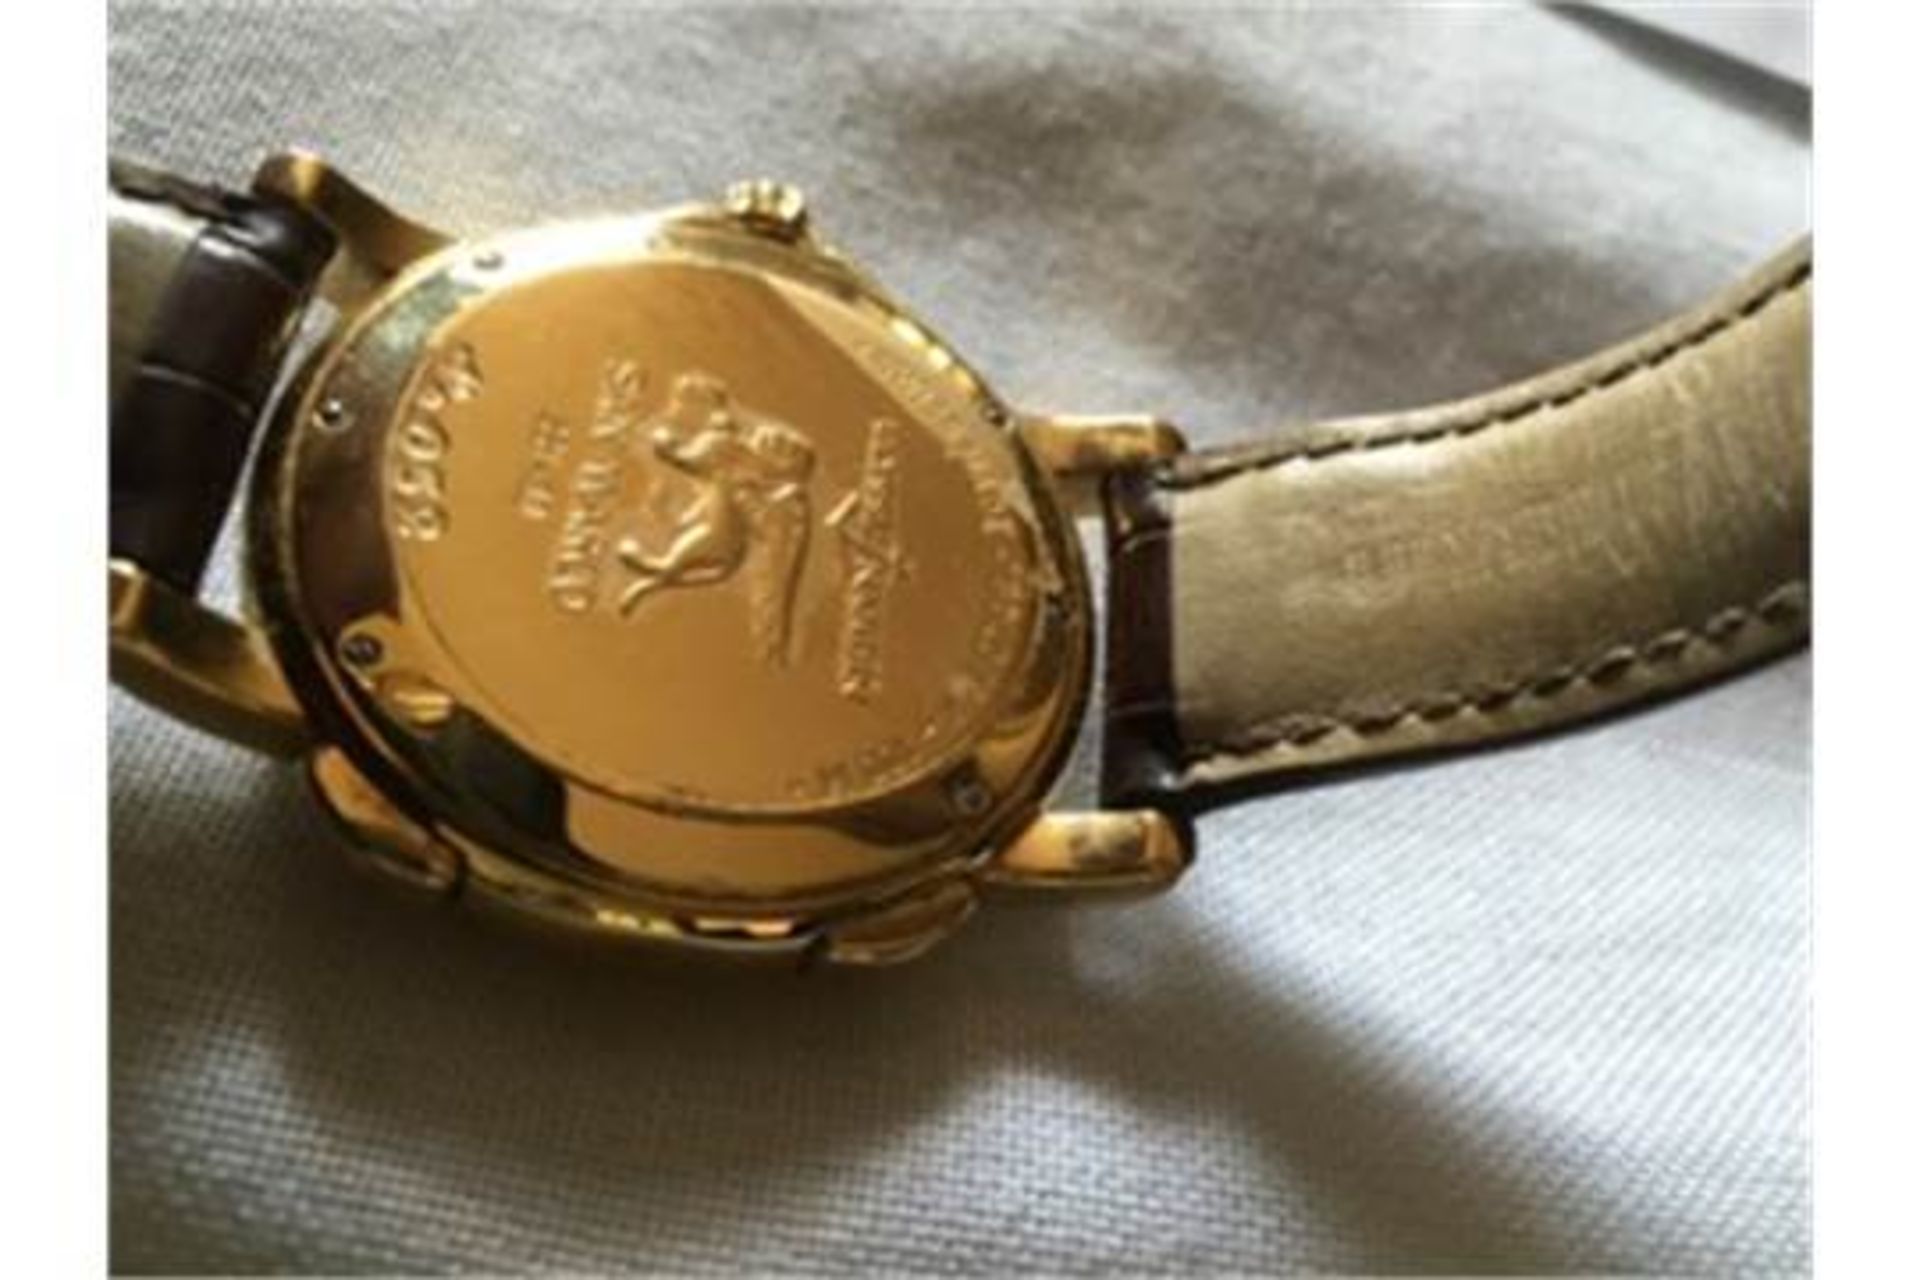 ULYSSE NARDIN GMT +/- IN 18K GOLD CASE WITH 18K DEPLOYANT CLASP - Image 5 of 9